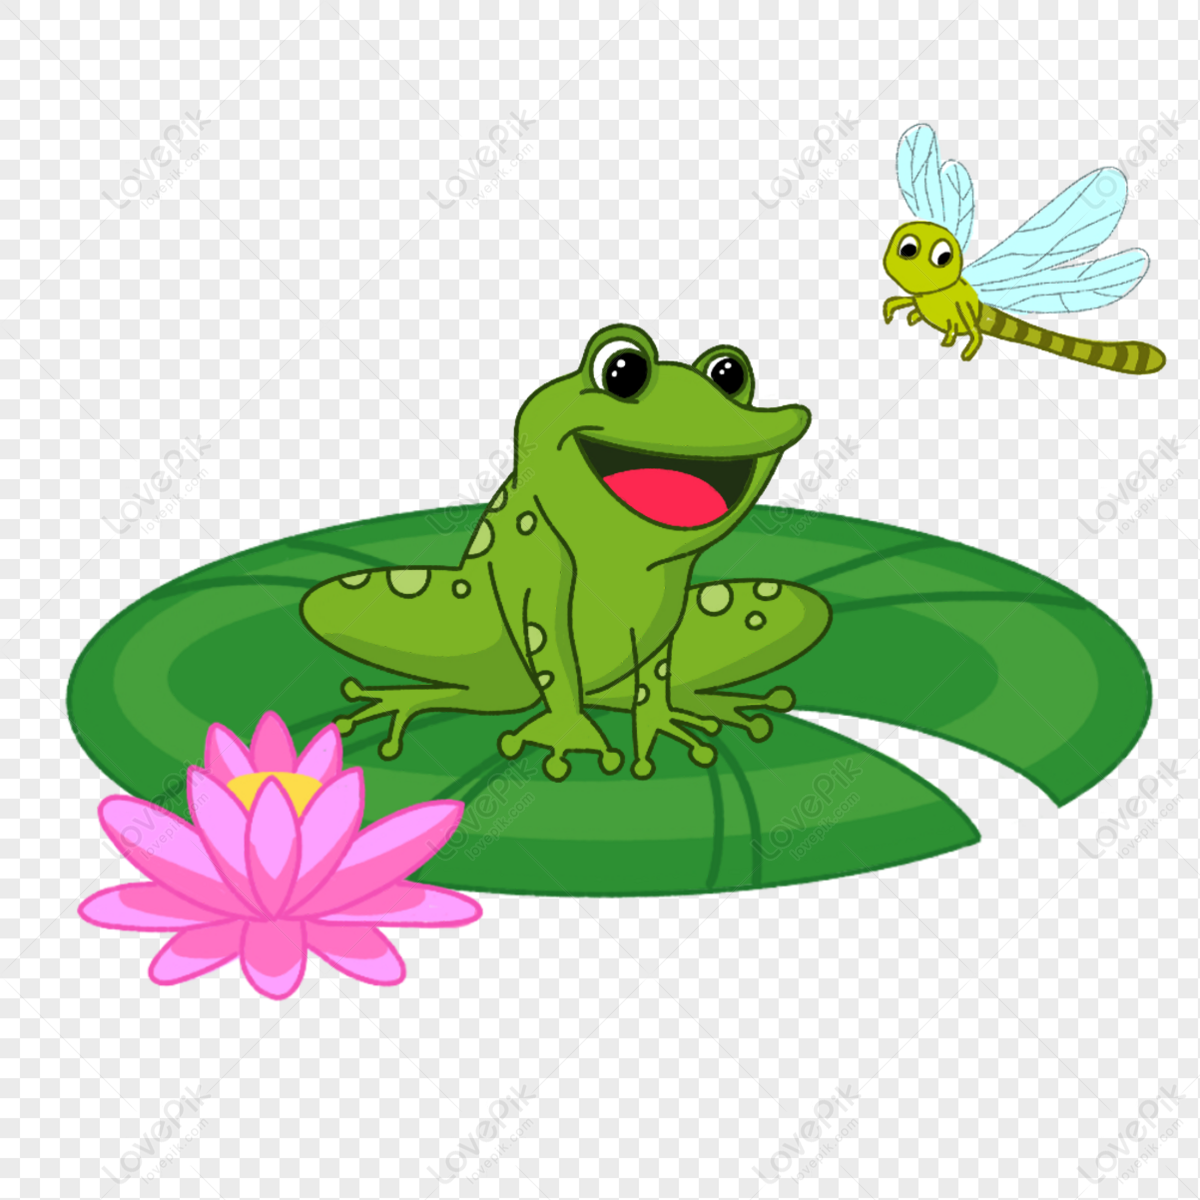 frog pond clipart